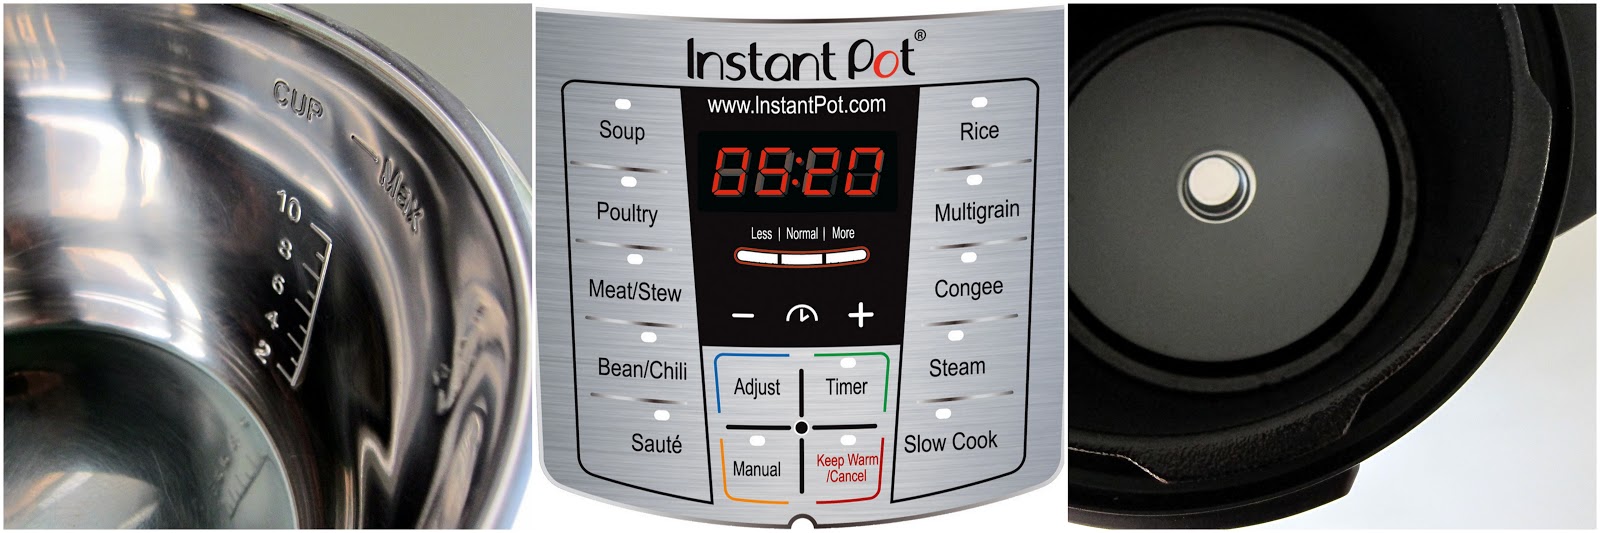 Instant Pot Ip lux60 6 in 1 Programmable Pressure Cooker 6 Quart